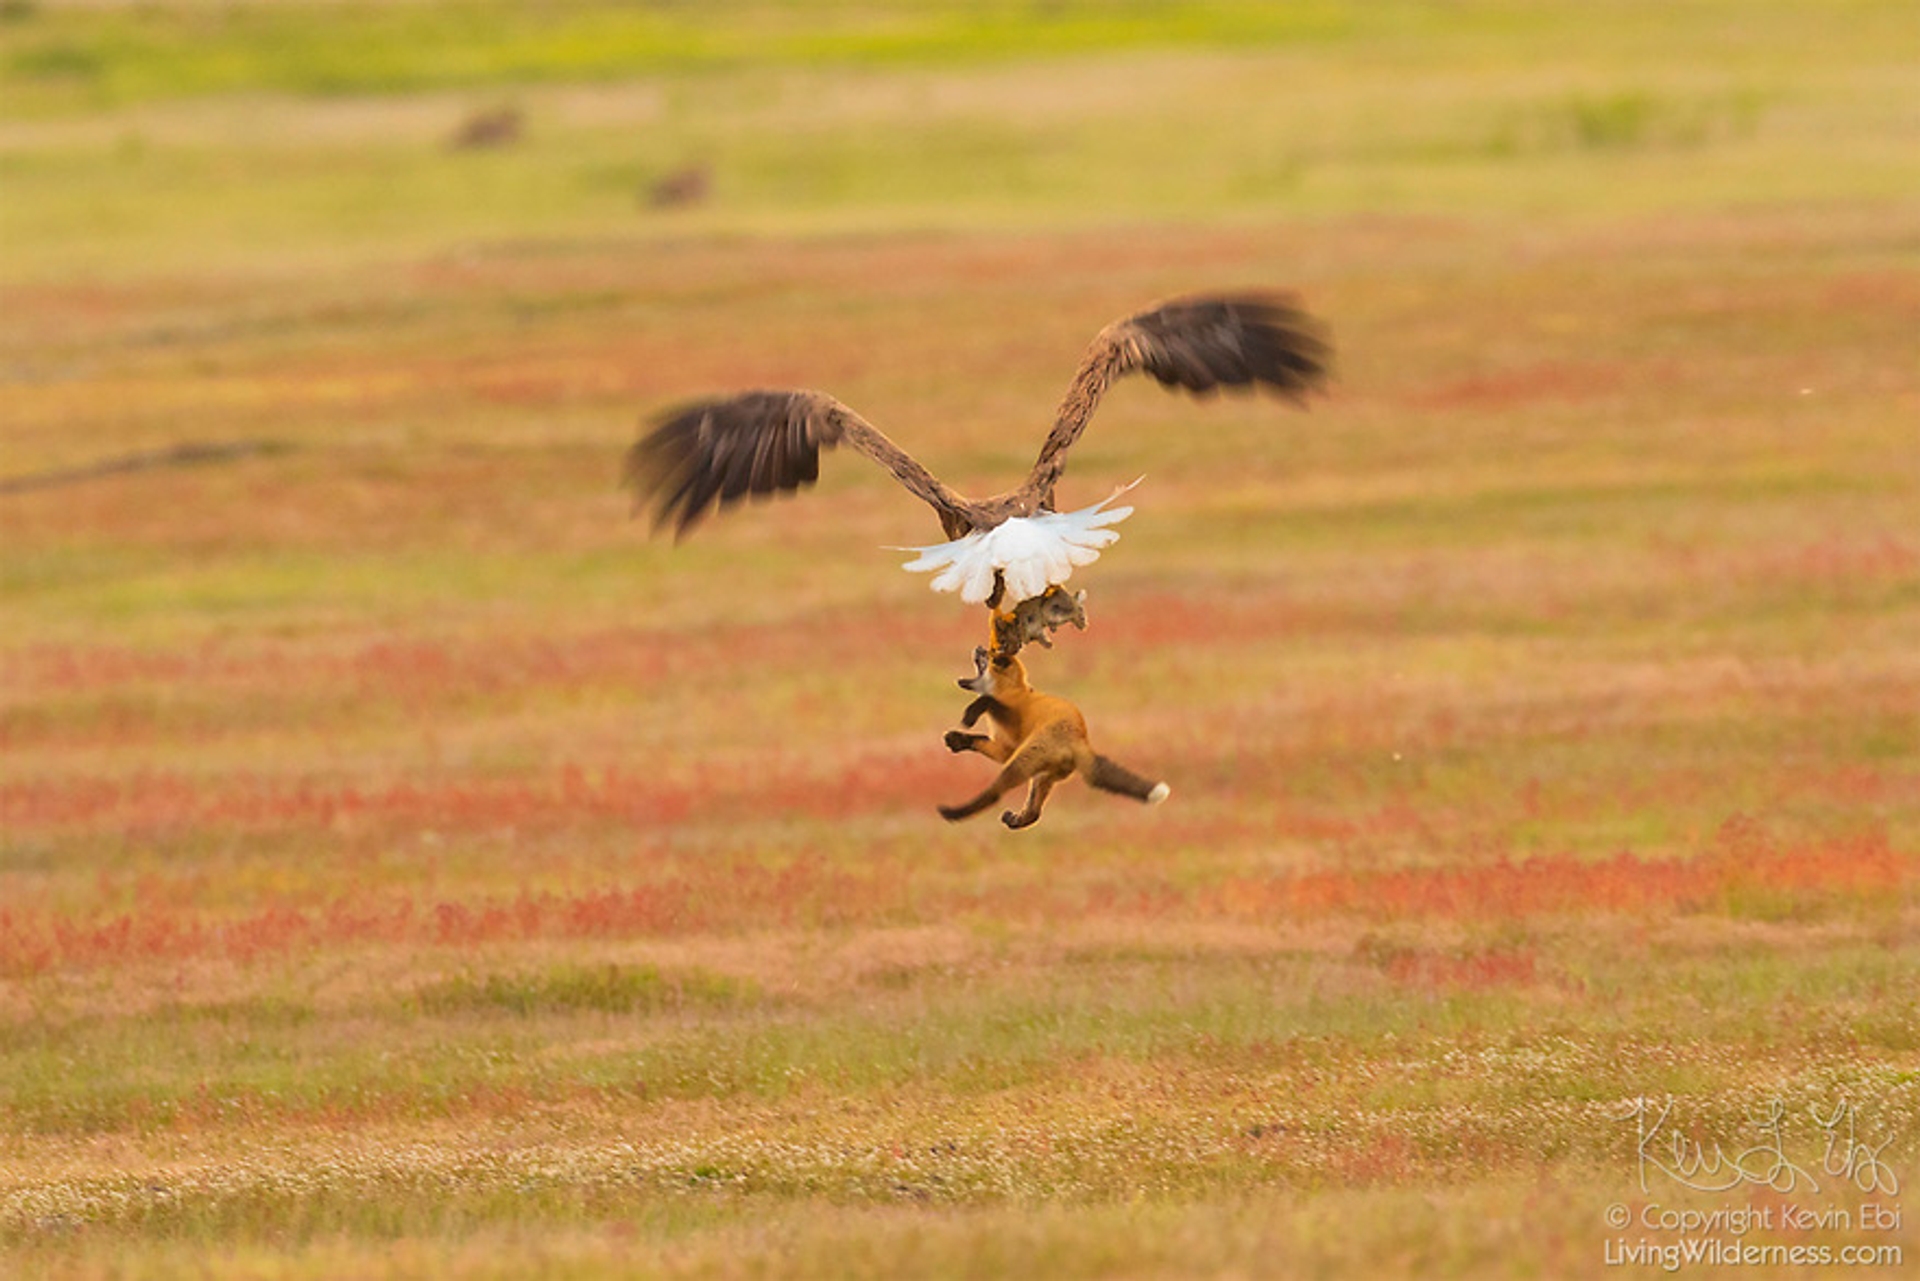 5b07de9131977-wildlife-photography-eagle-fox-fighting-over-rabbit-kevin-ebi-15-5b066362d8ec7__880